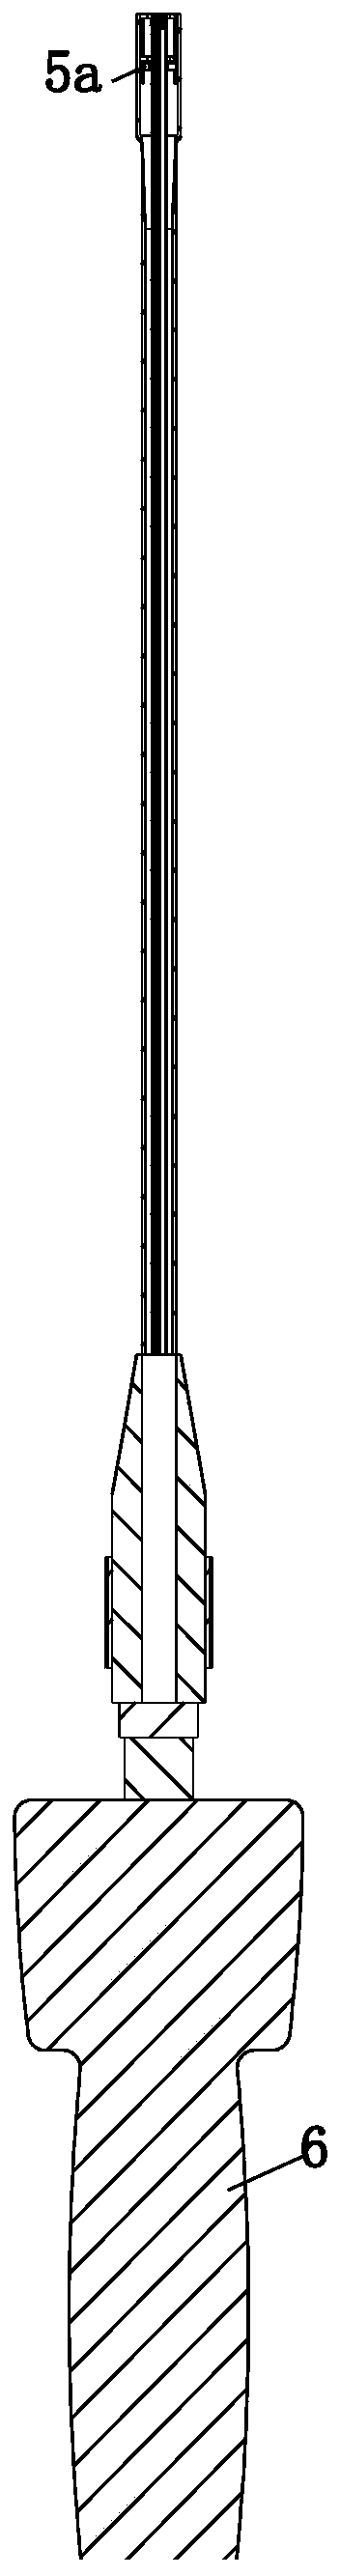 A kind of ligation device for gastric polyp gastroscope